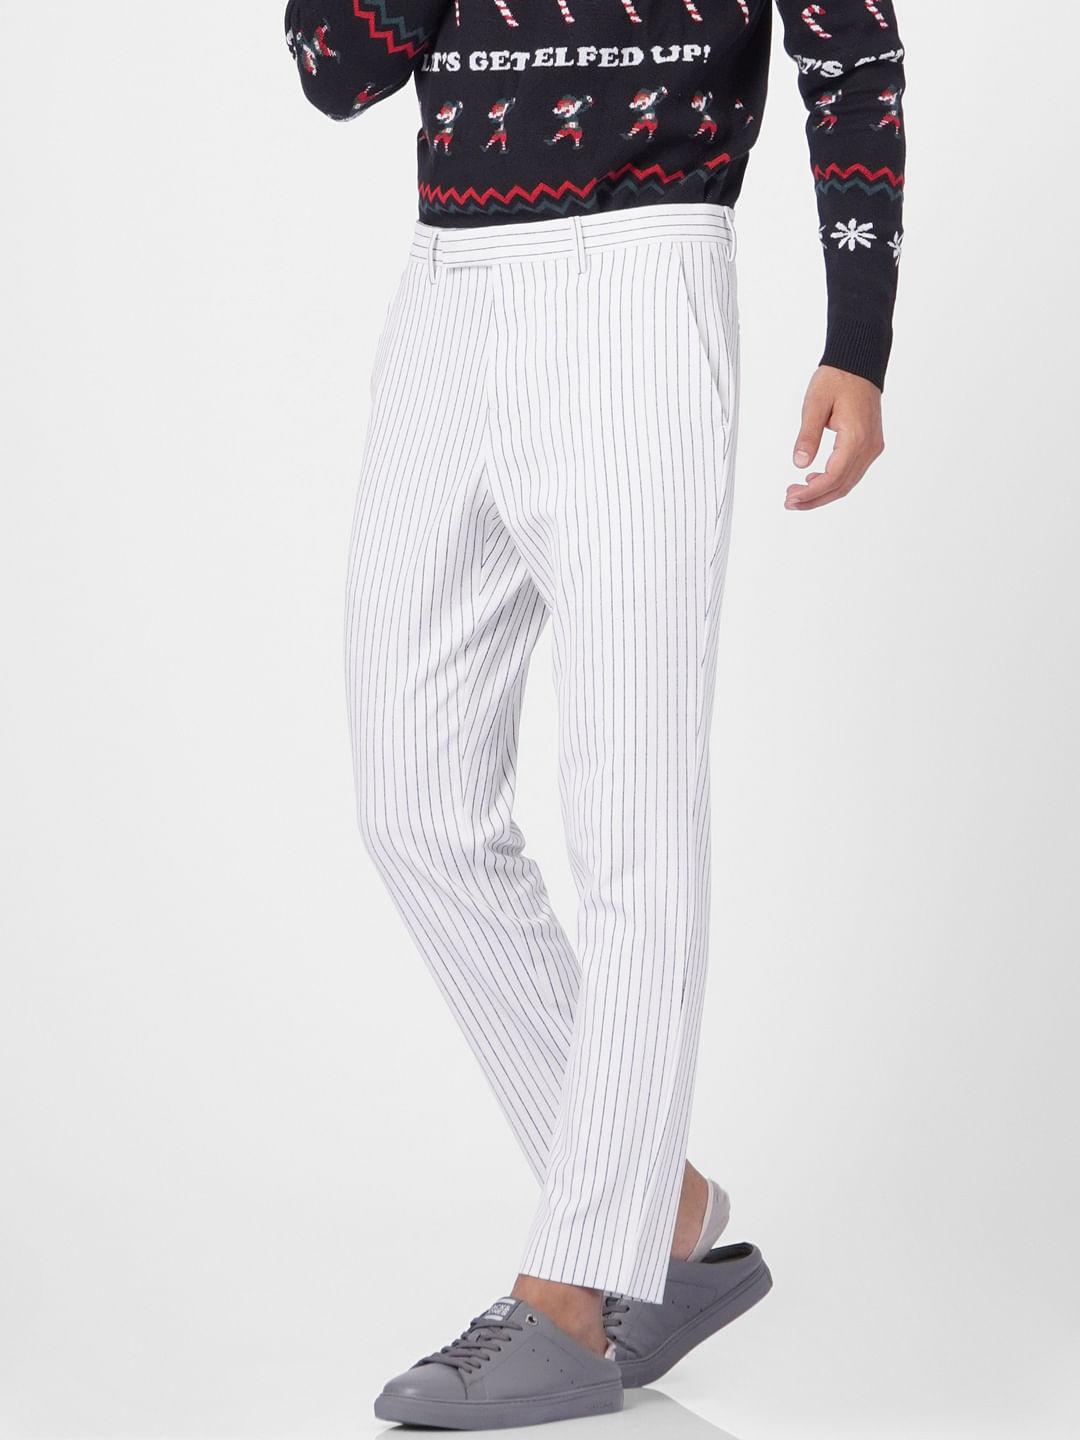 NAKD Trousers and Pants  Buy NAKD Flared Striped PantsBlackStripe  OnlineNykaa Fashion